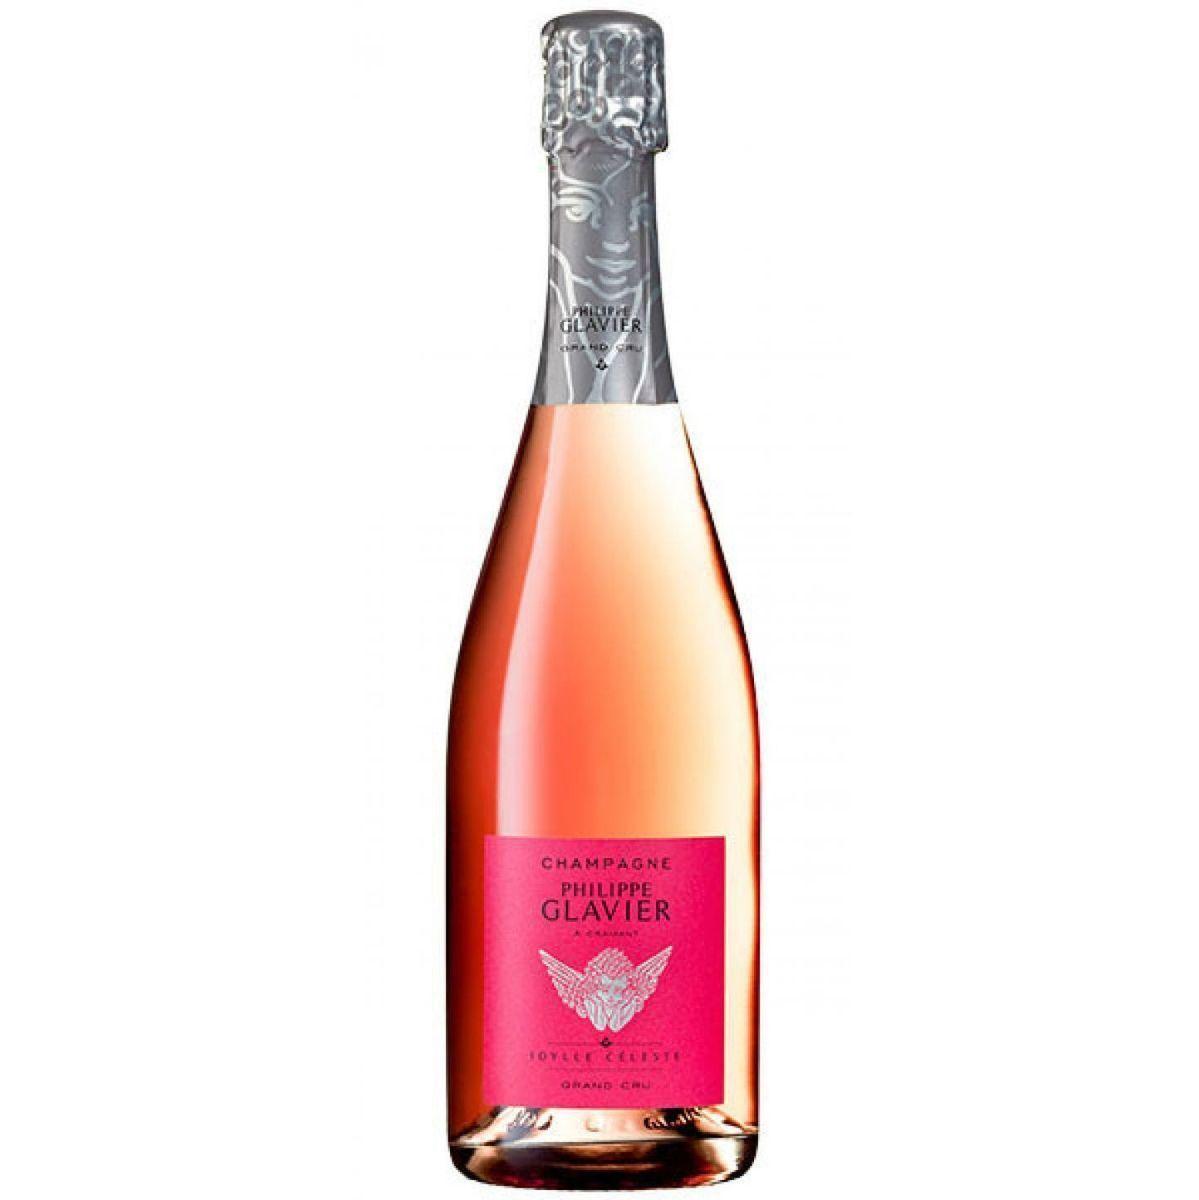 philippe glavier champagne idylle celeste rosé grand cru